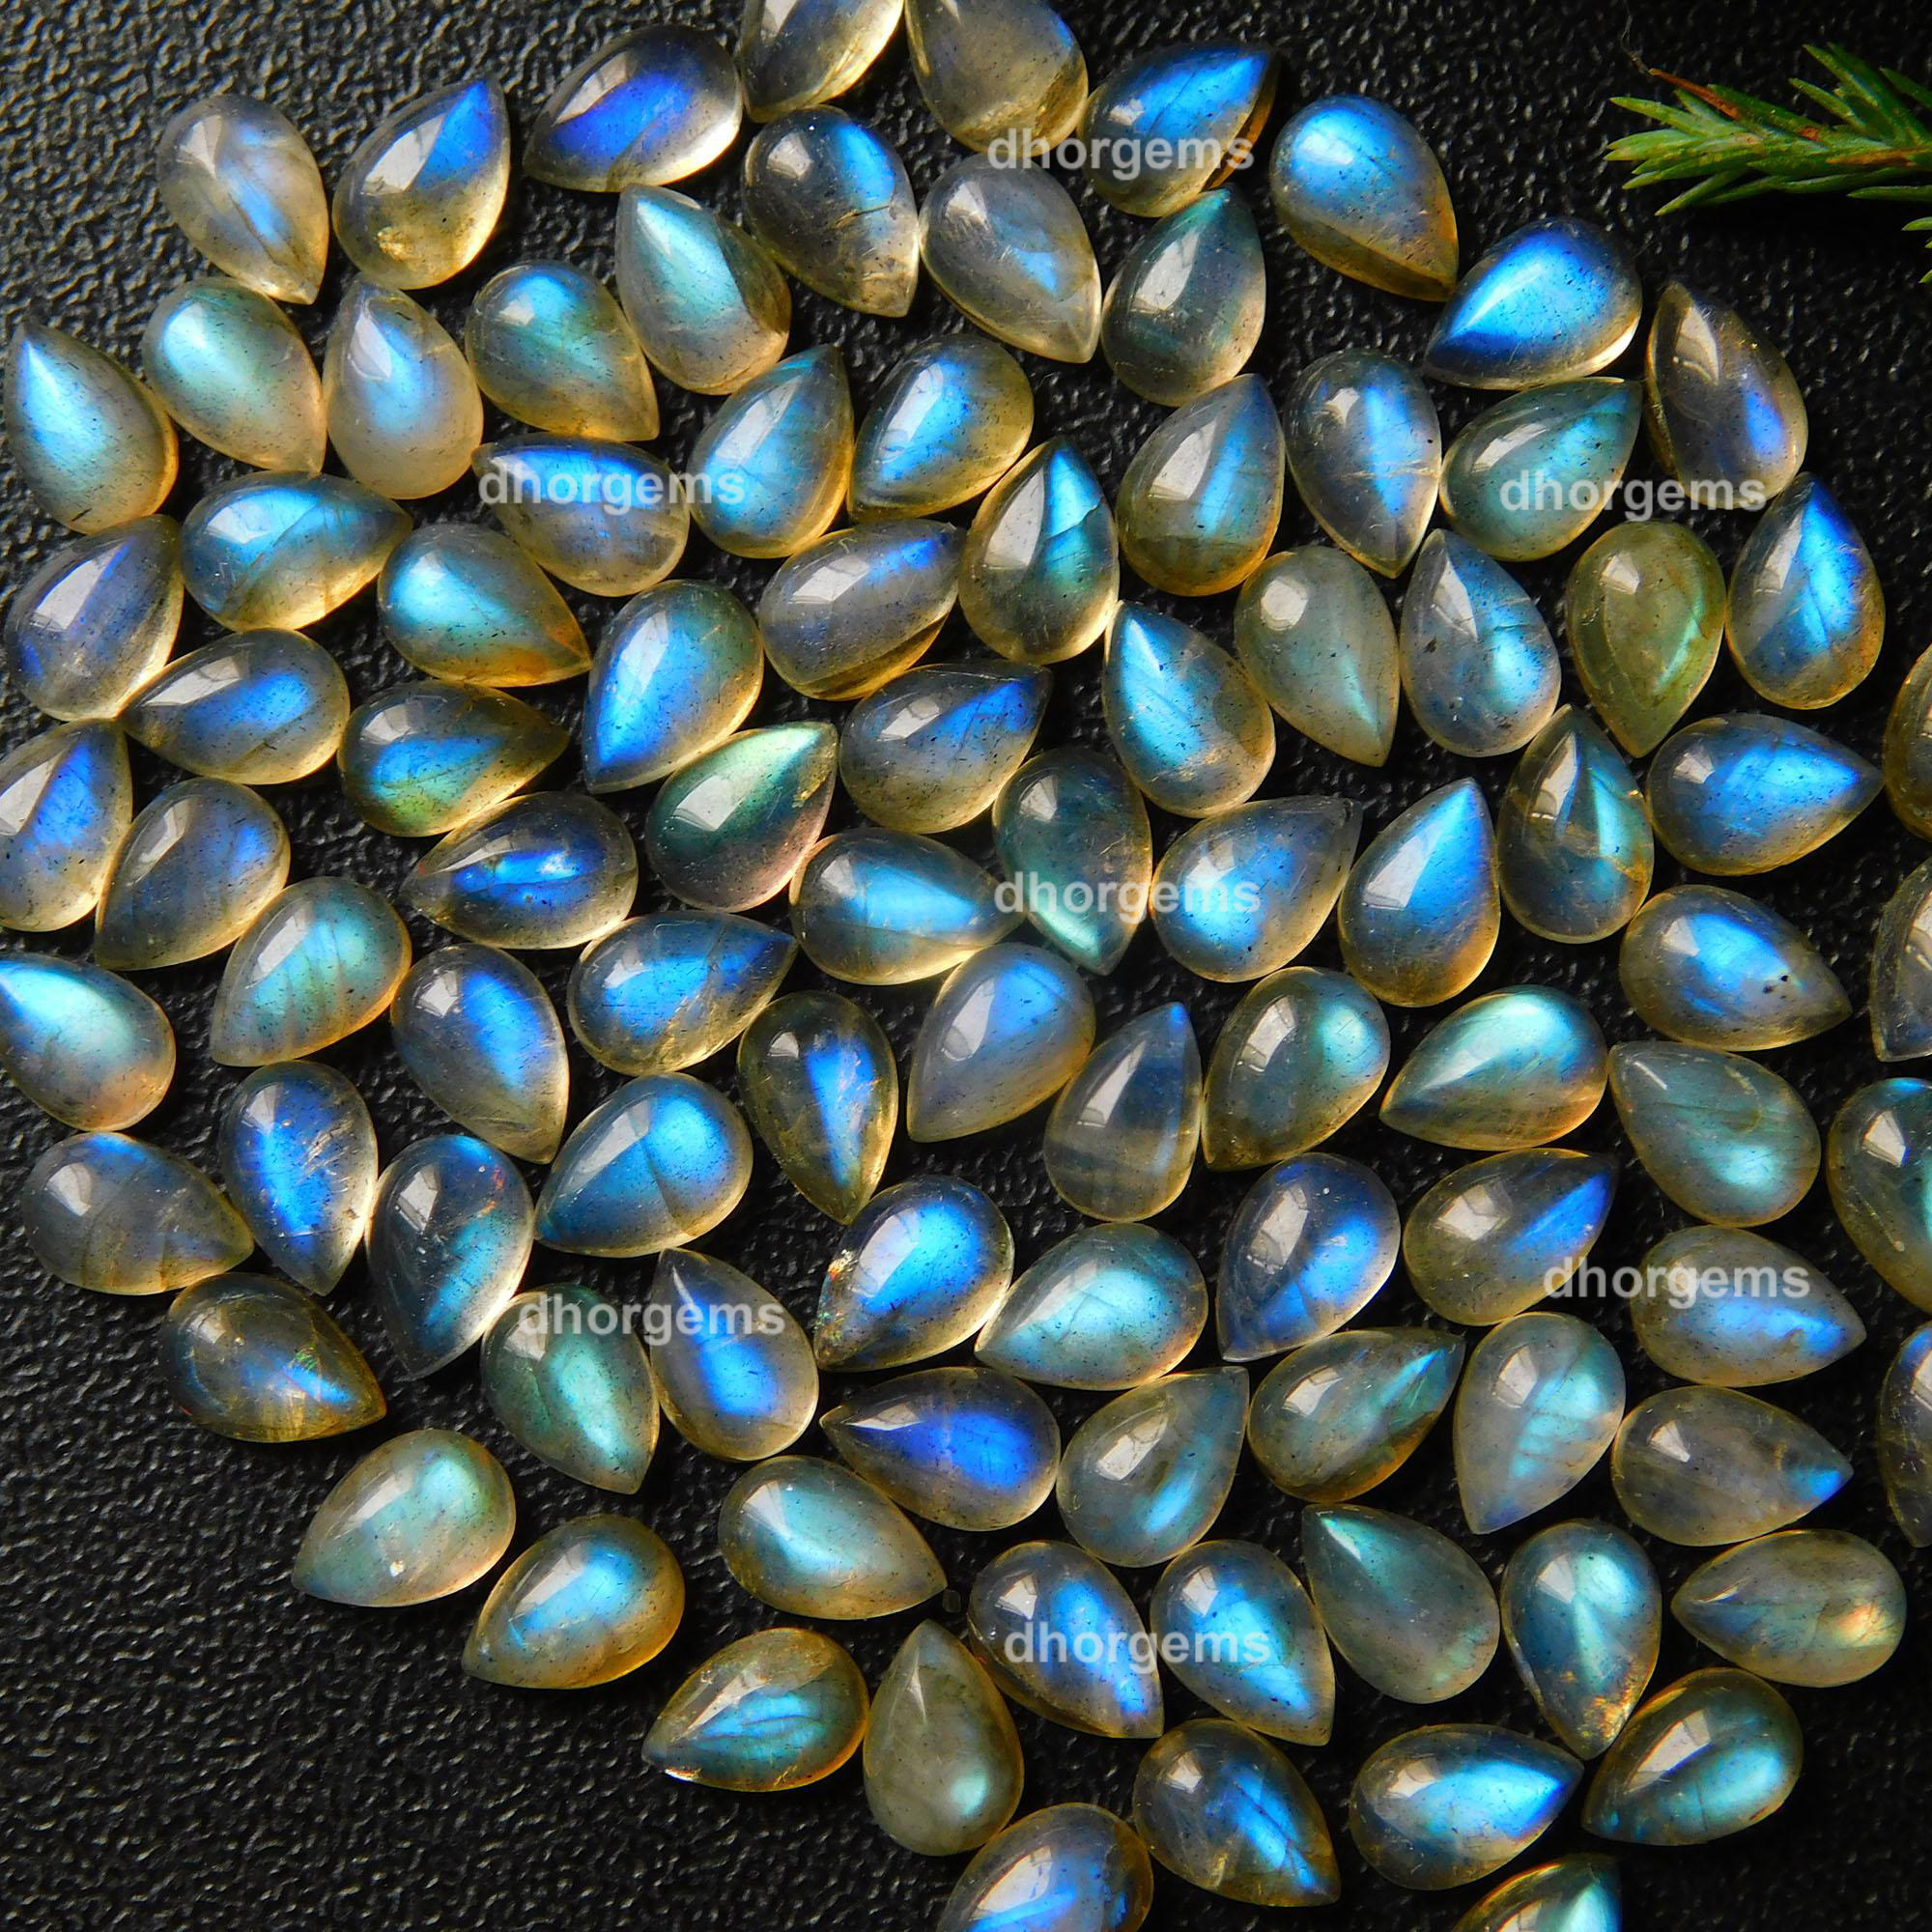 94Pcs 46.15Cts Natural Blue Fire Labradorite Loose Cabochon Calibrated Pear Shape Gemstone Lot 4x6mm#9252